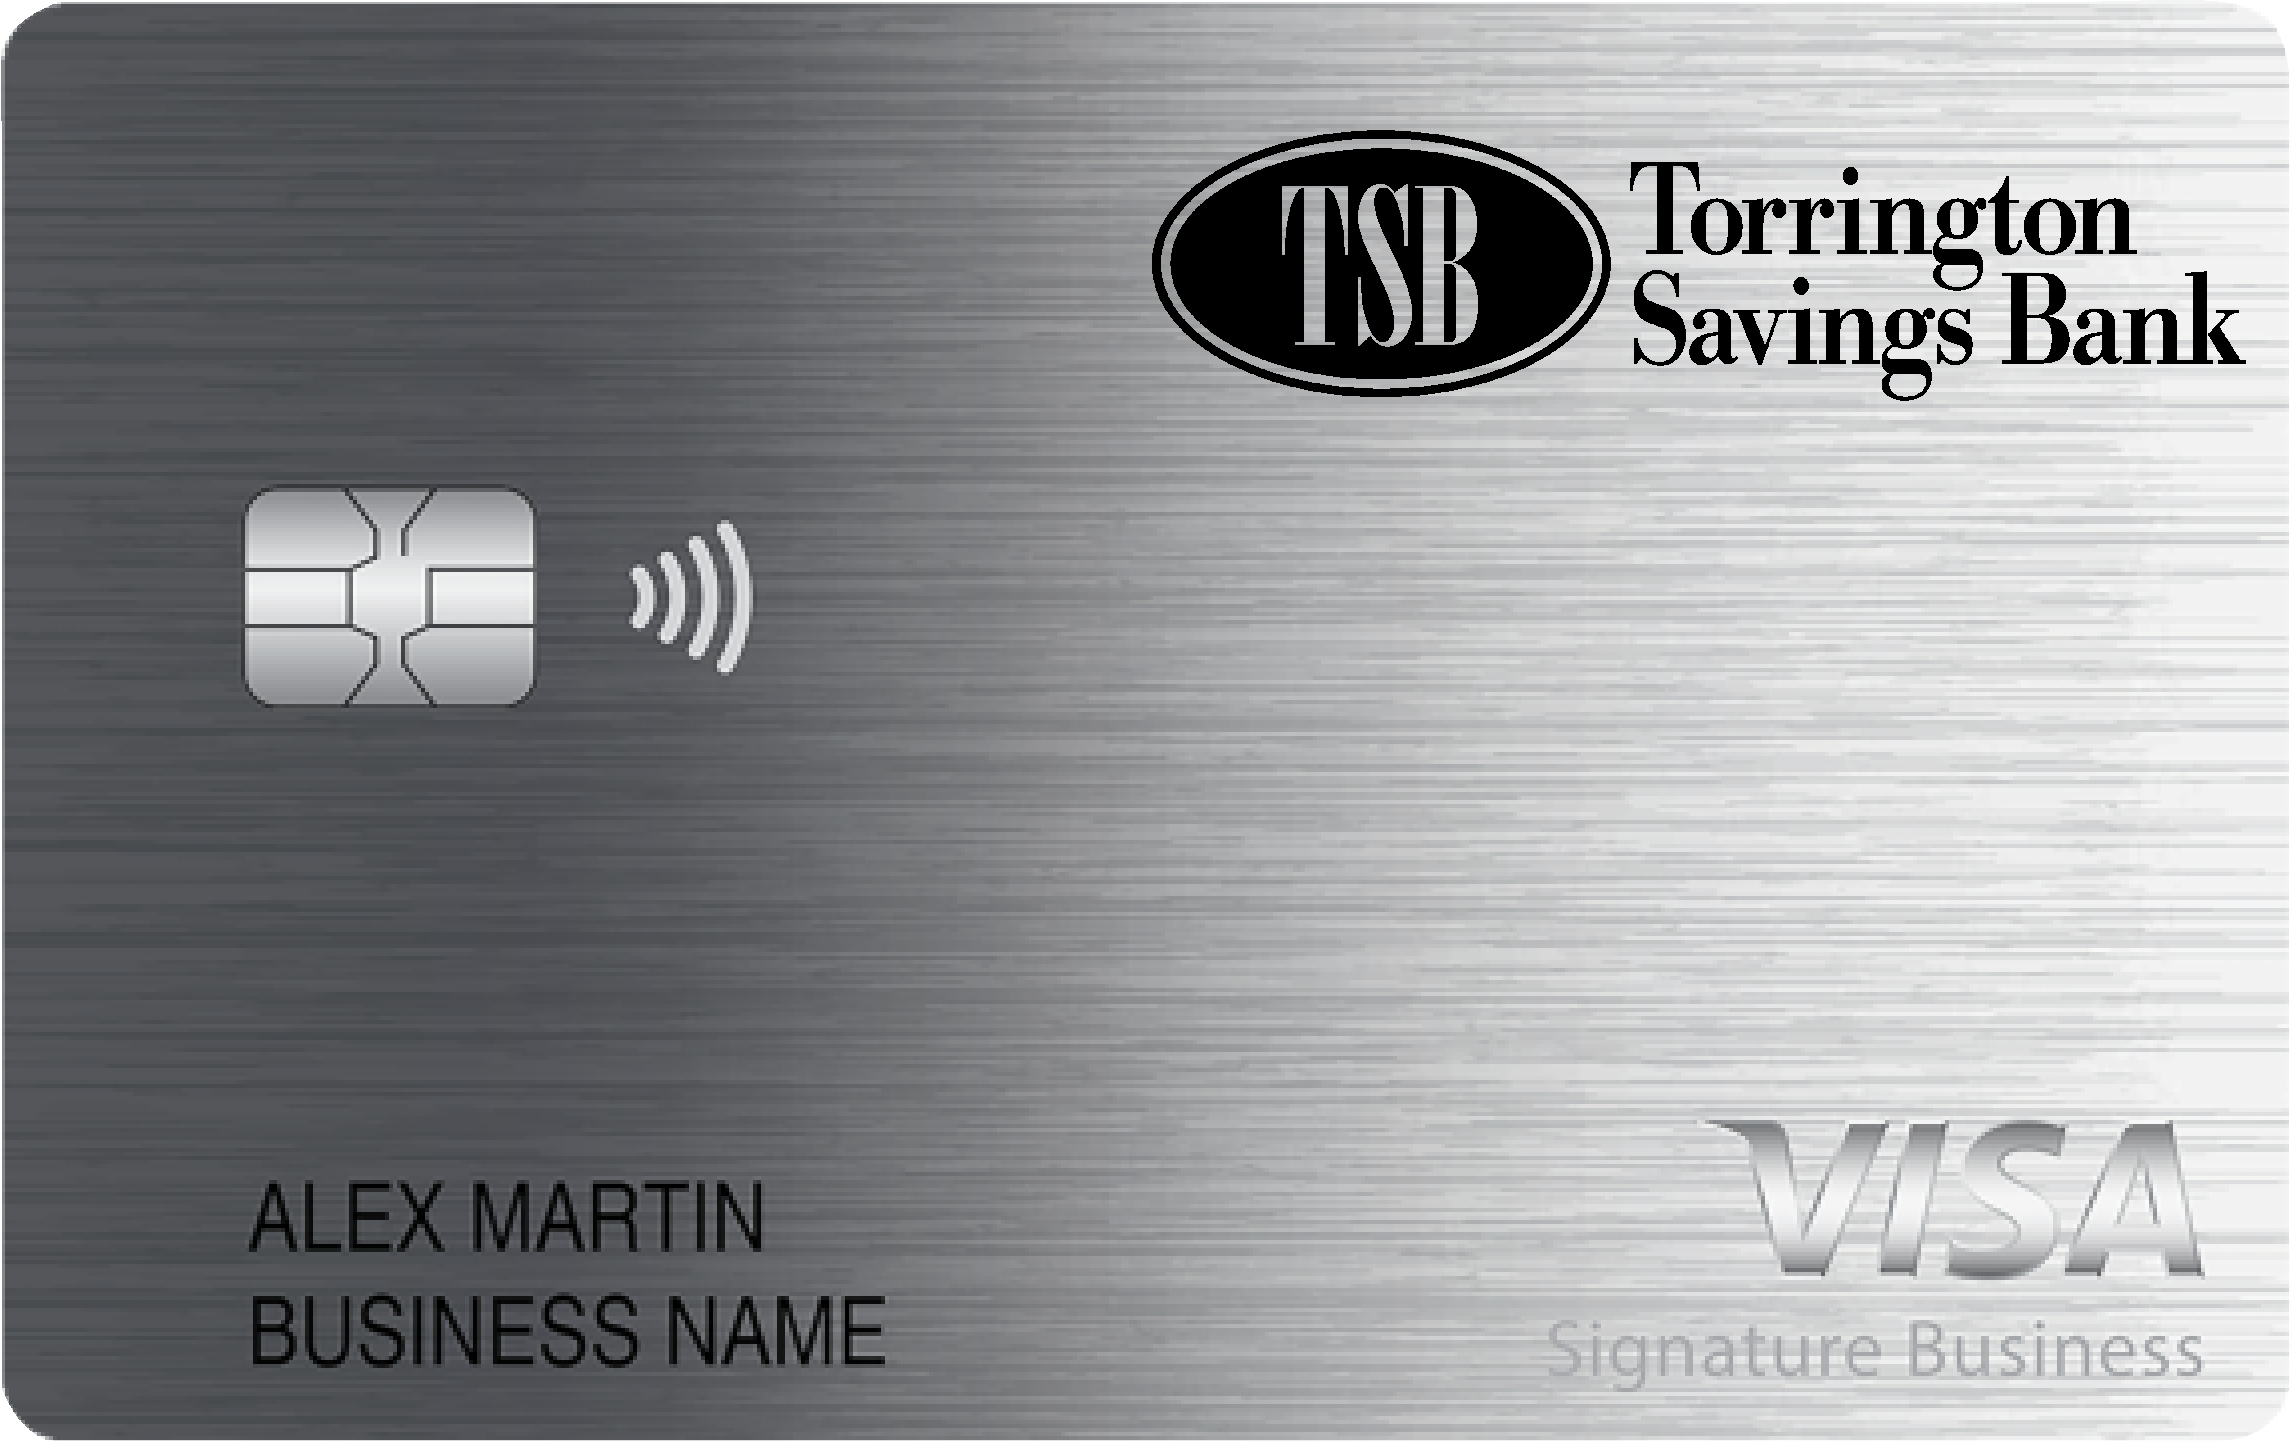 Torrington Savings Bank Smart Business Rewards Card